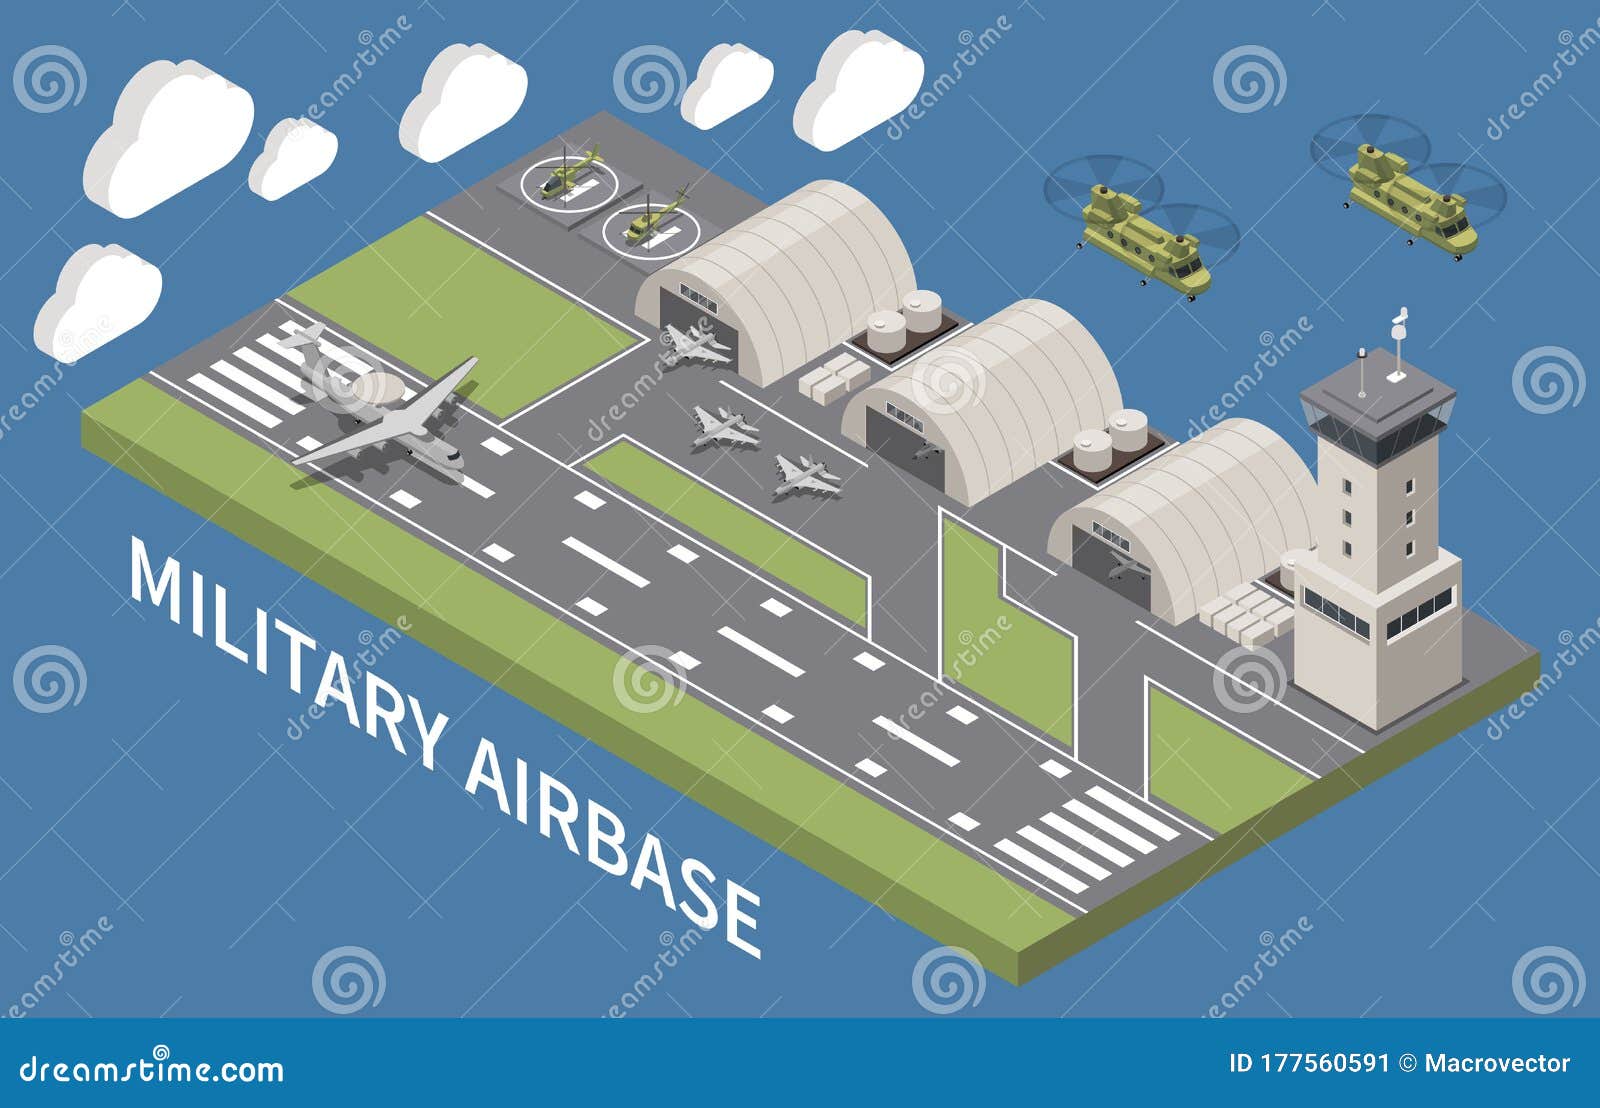 military air force base isometric